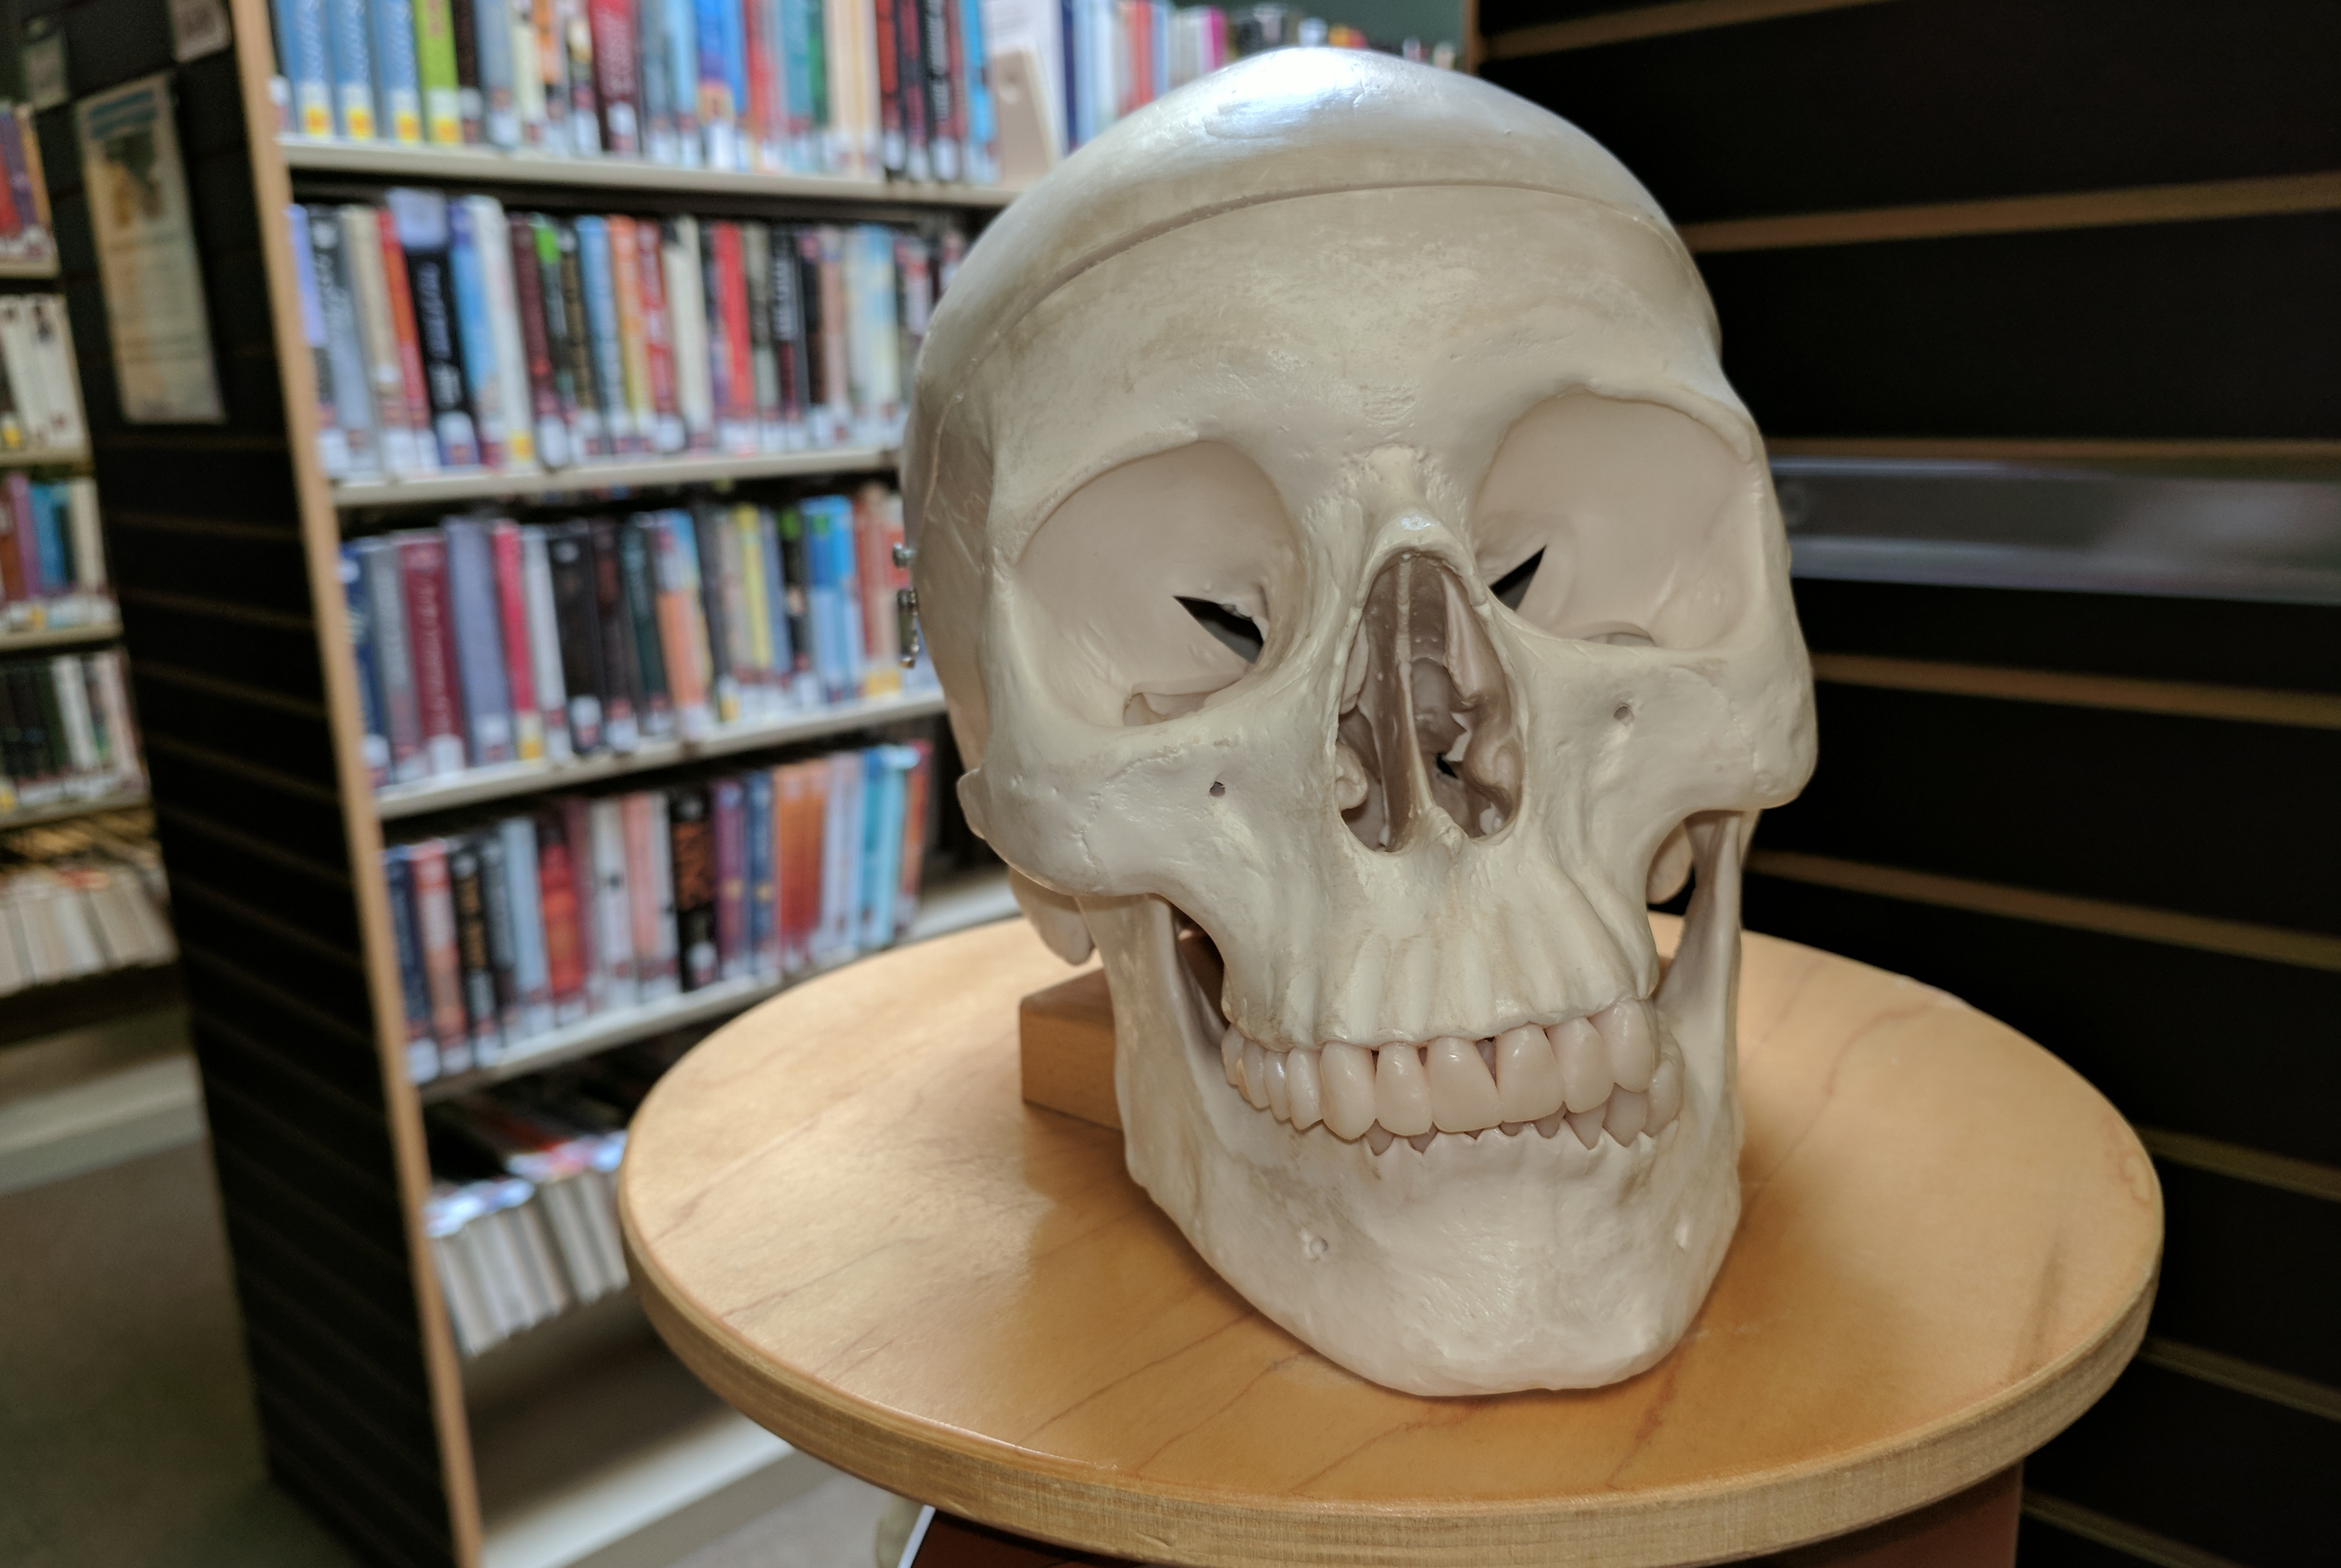 Skull model - Discover Health exhibit